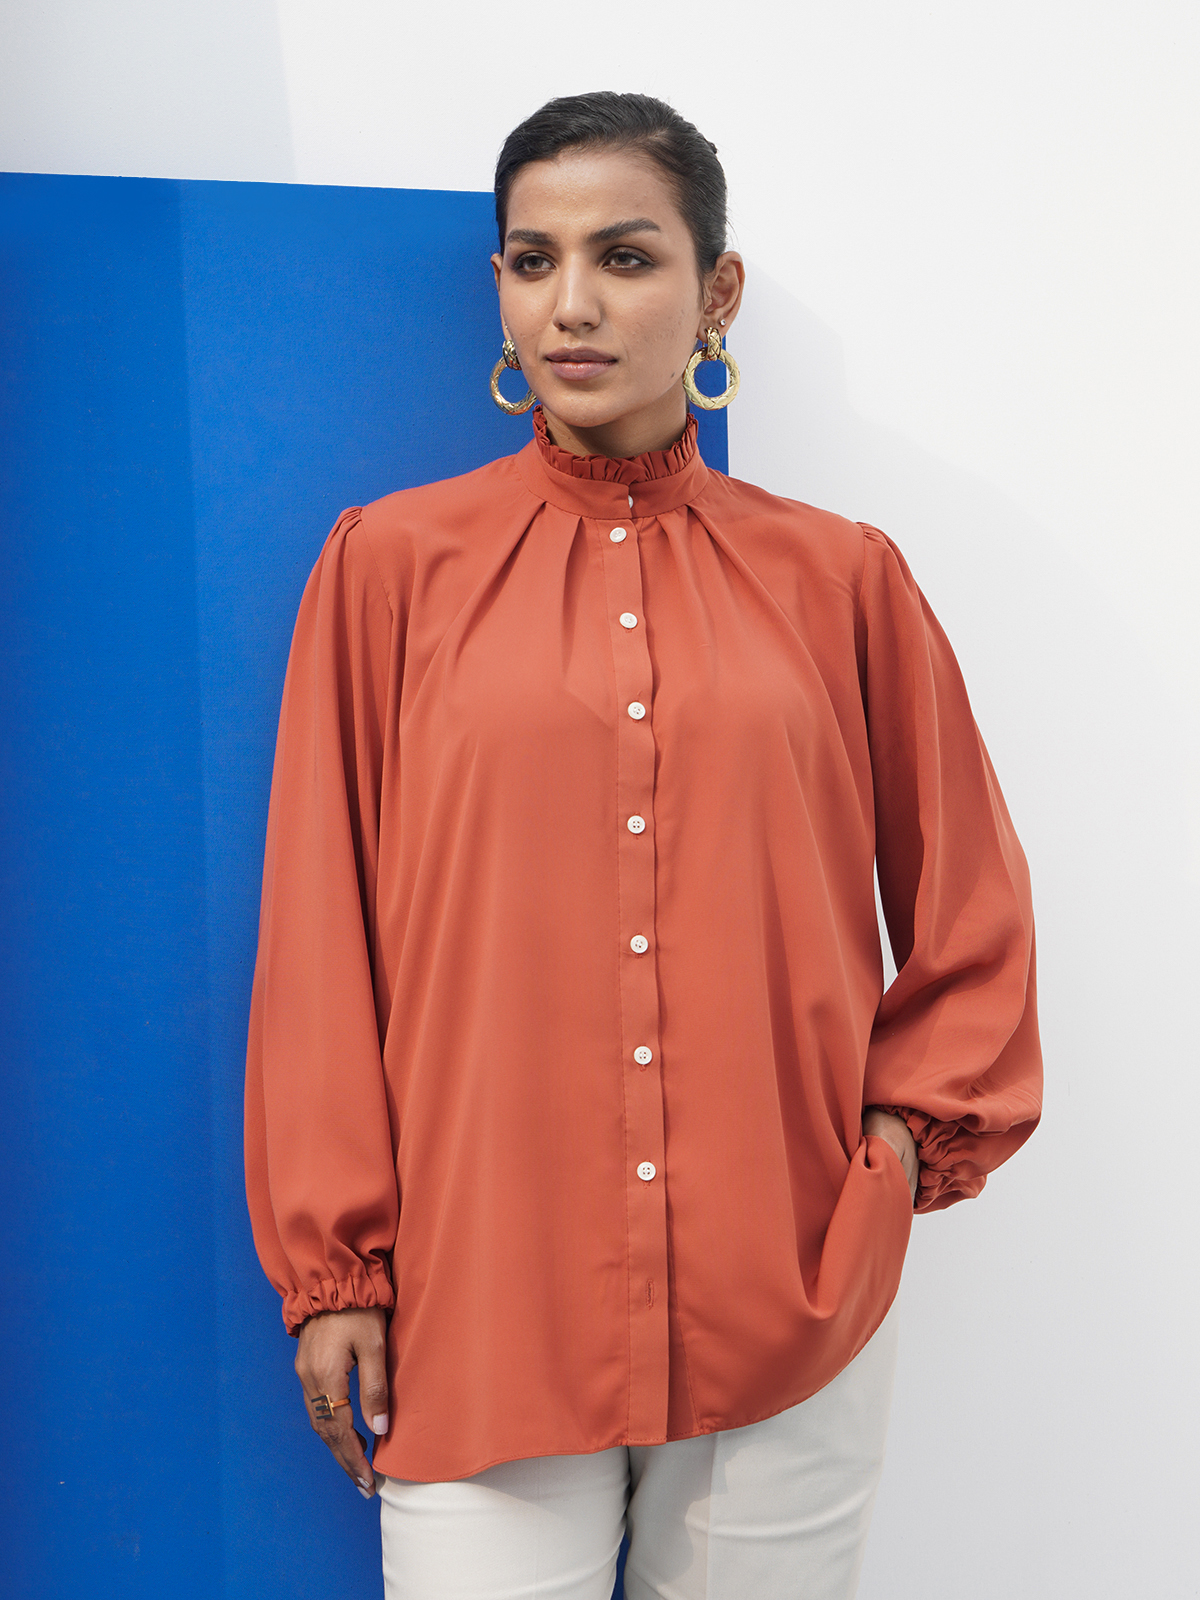 Burnt Orange Button Down Shirt by The Kuku Store, Pakistan.